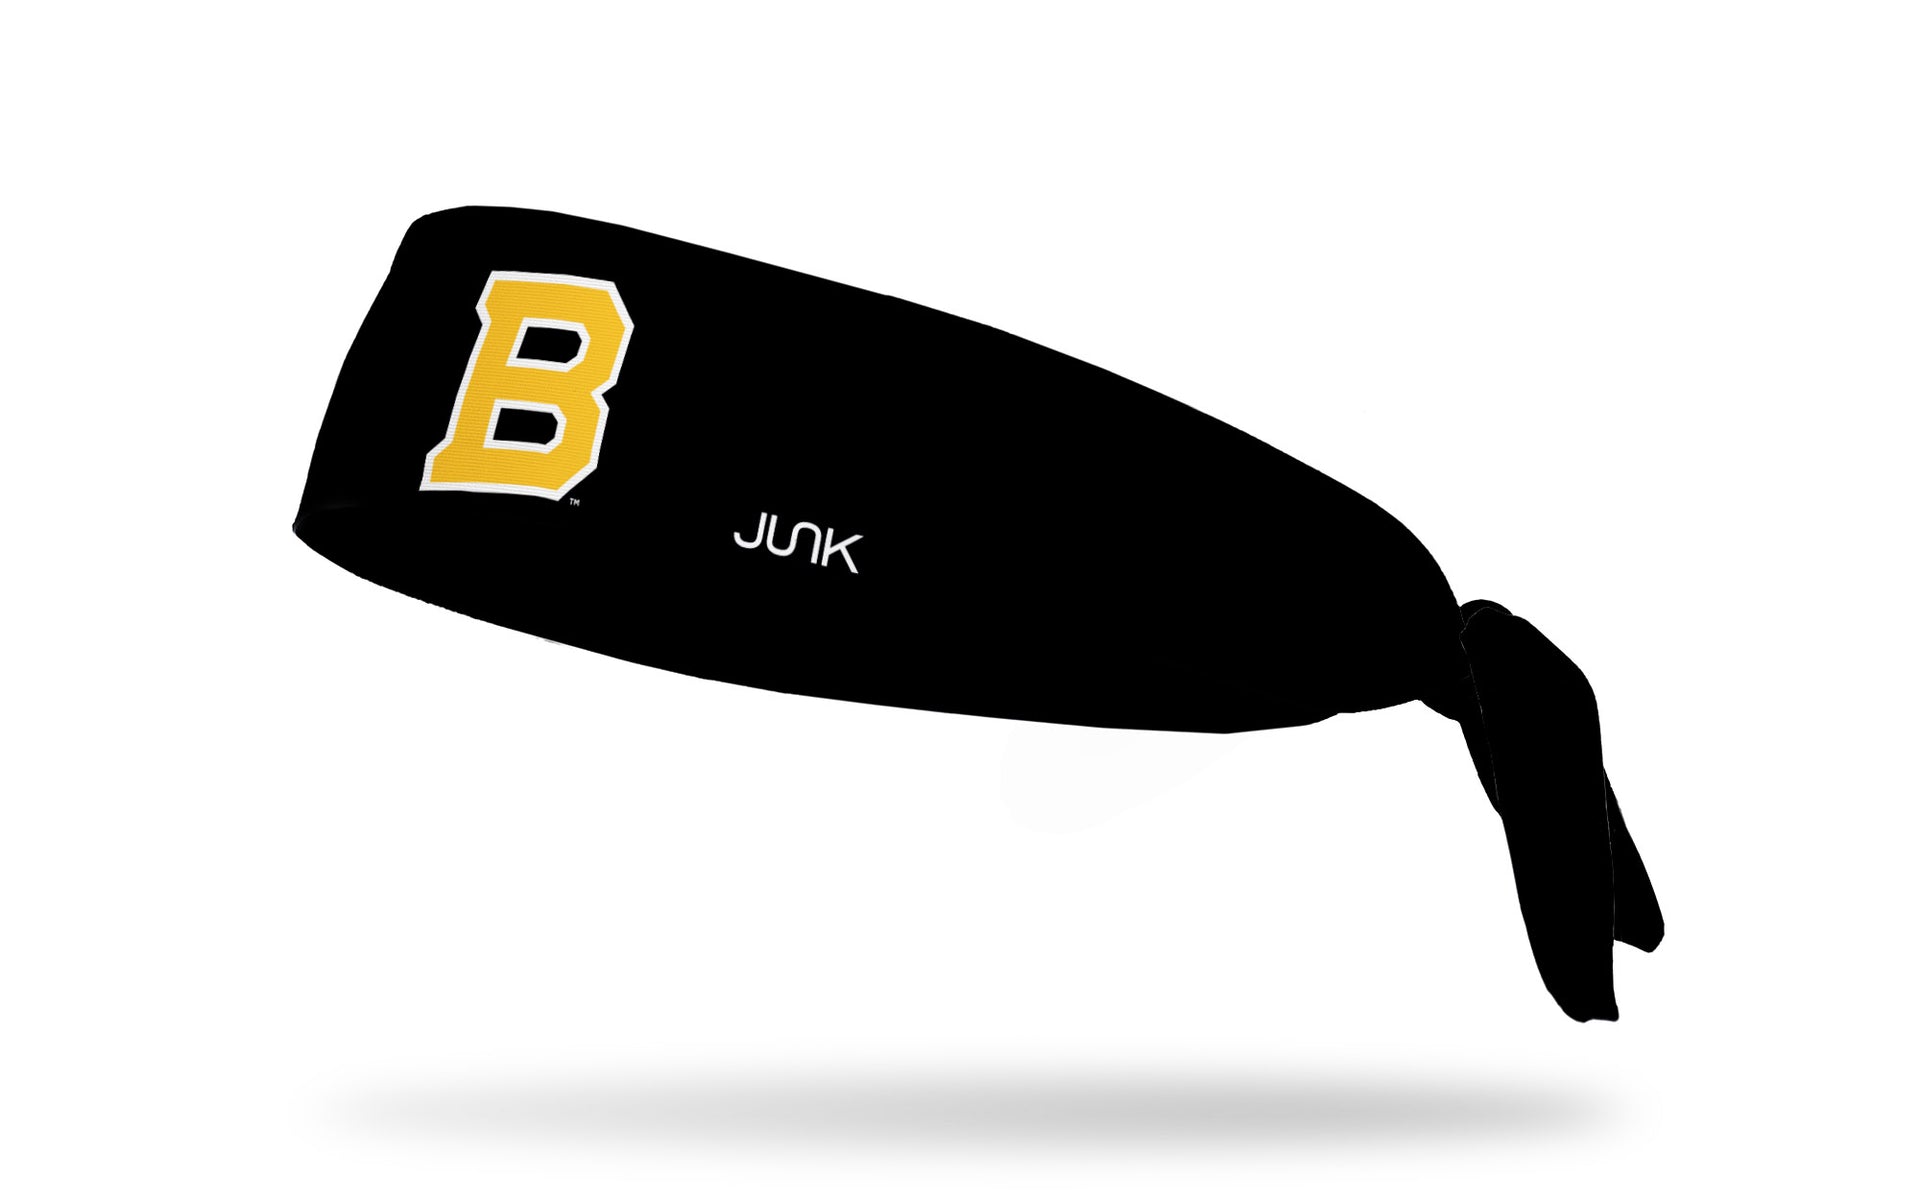 Boston Bruins: B Logo Tie Headband - View 1